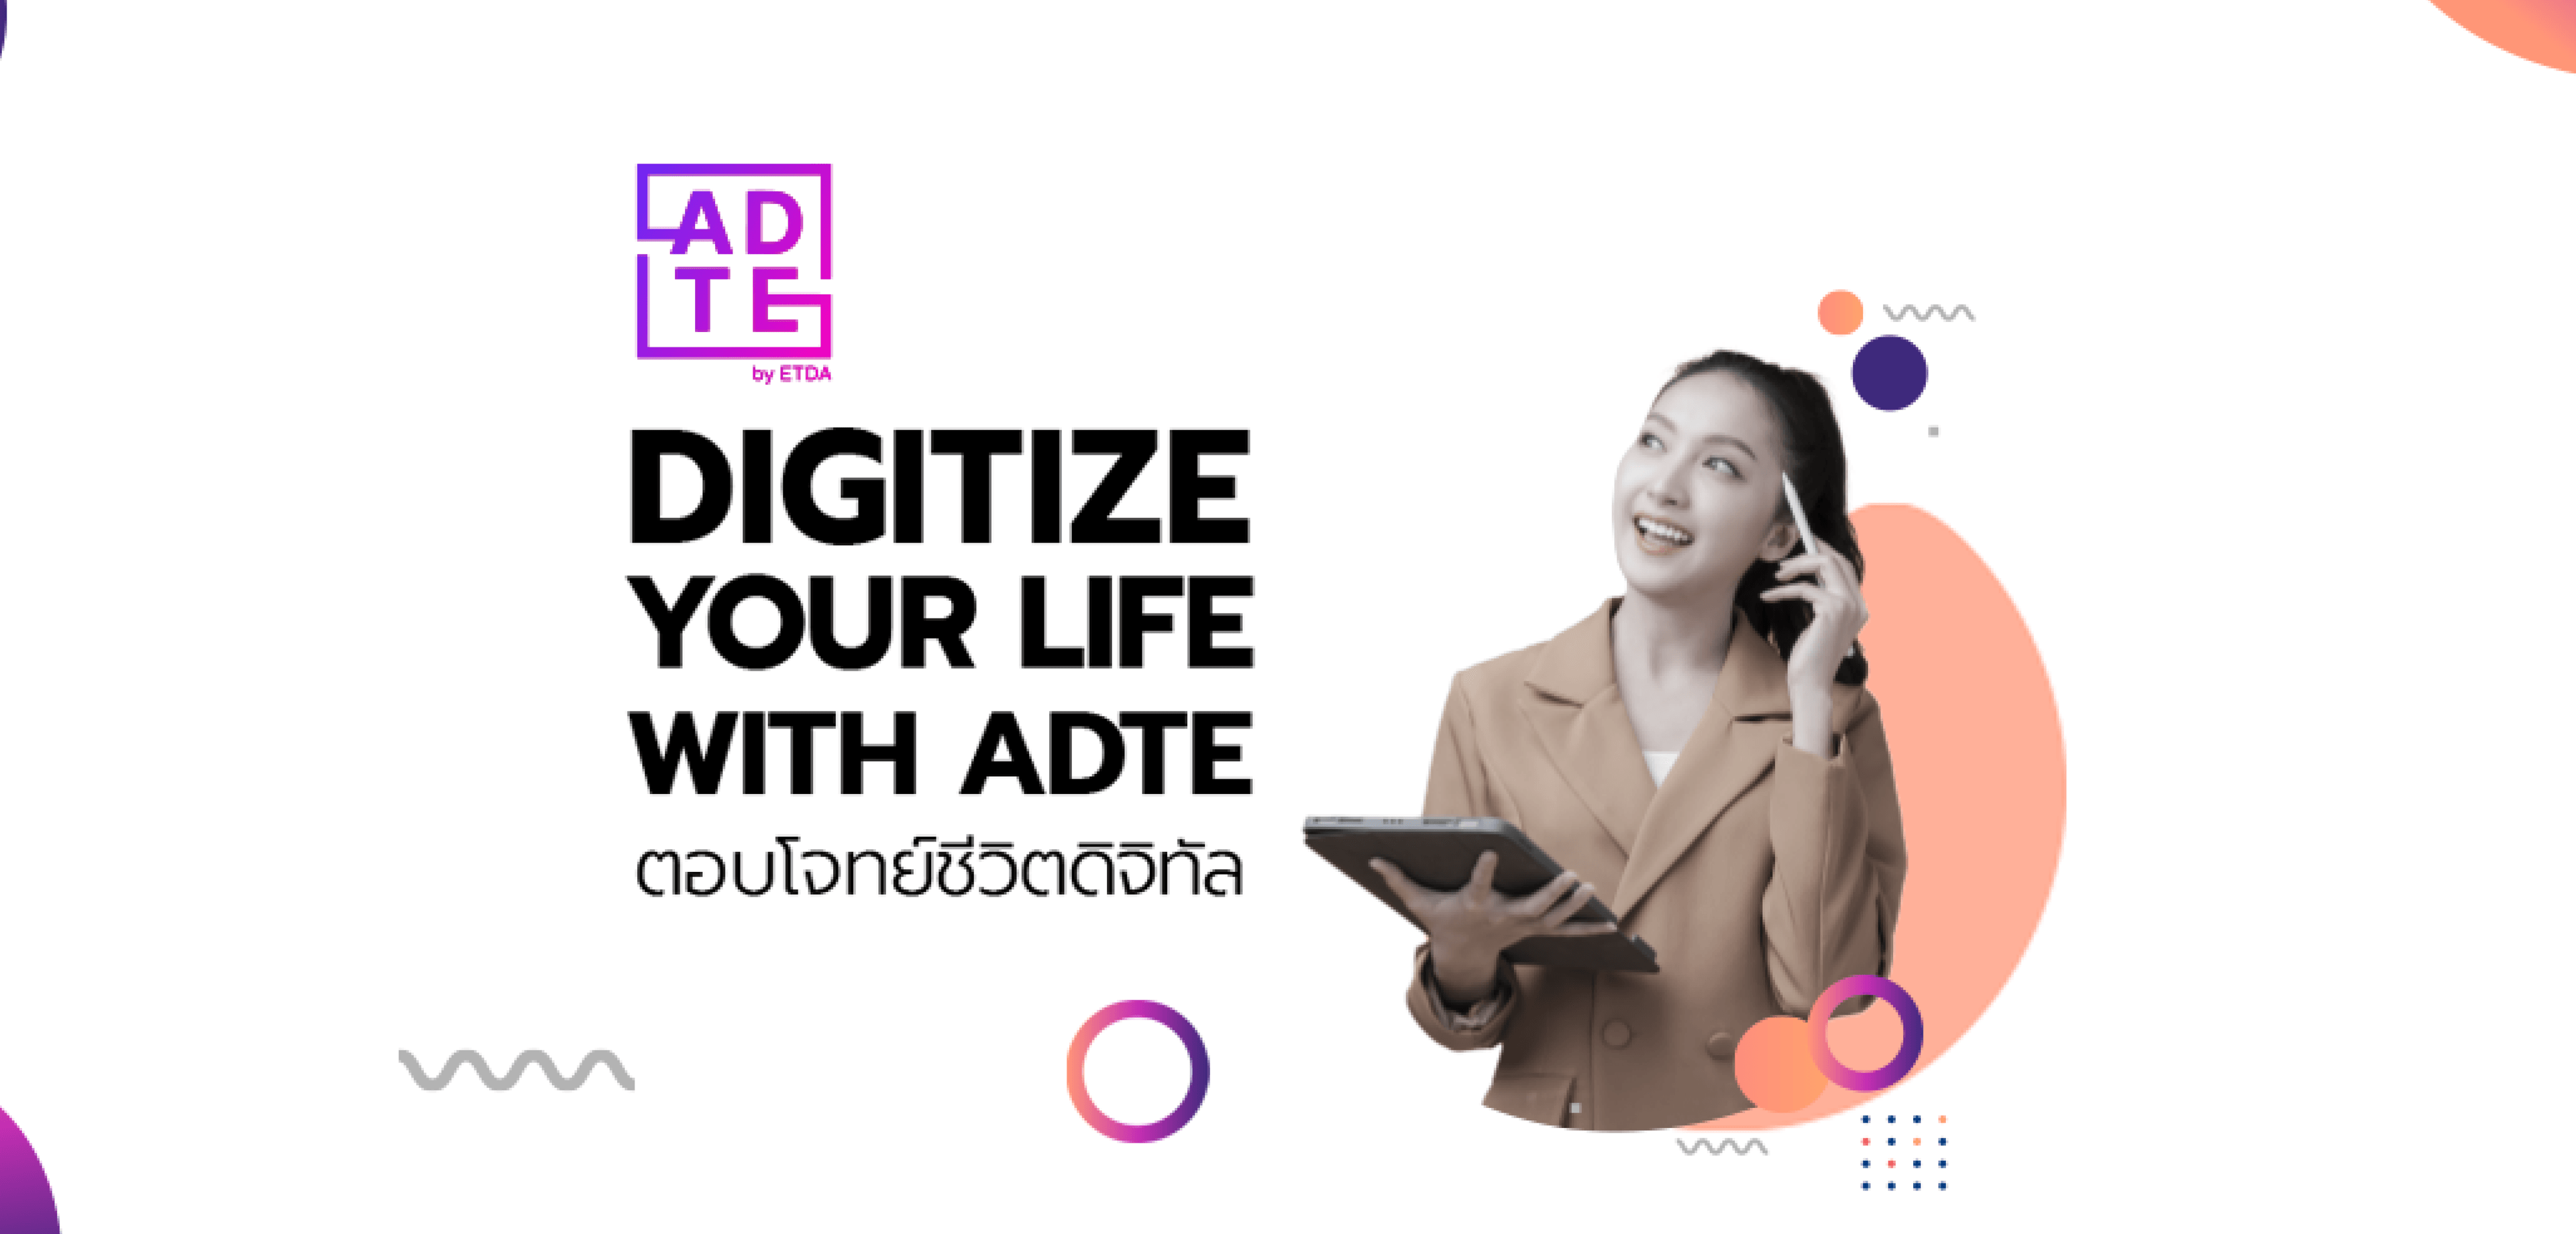 ADTE: Academy for Digital Transformation